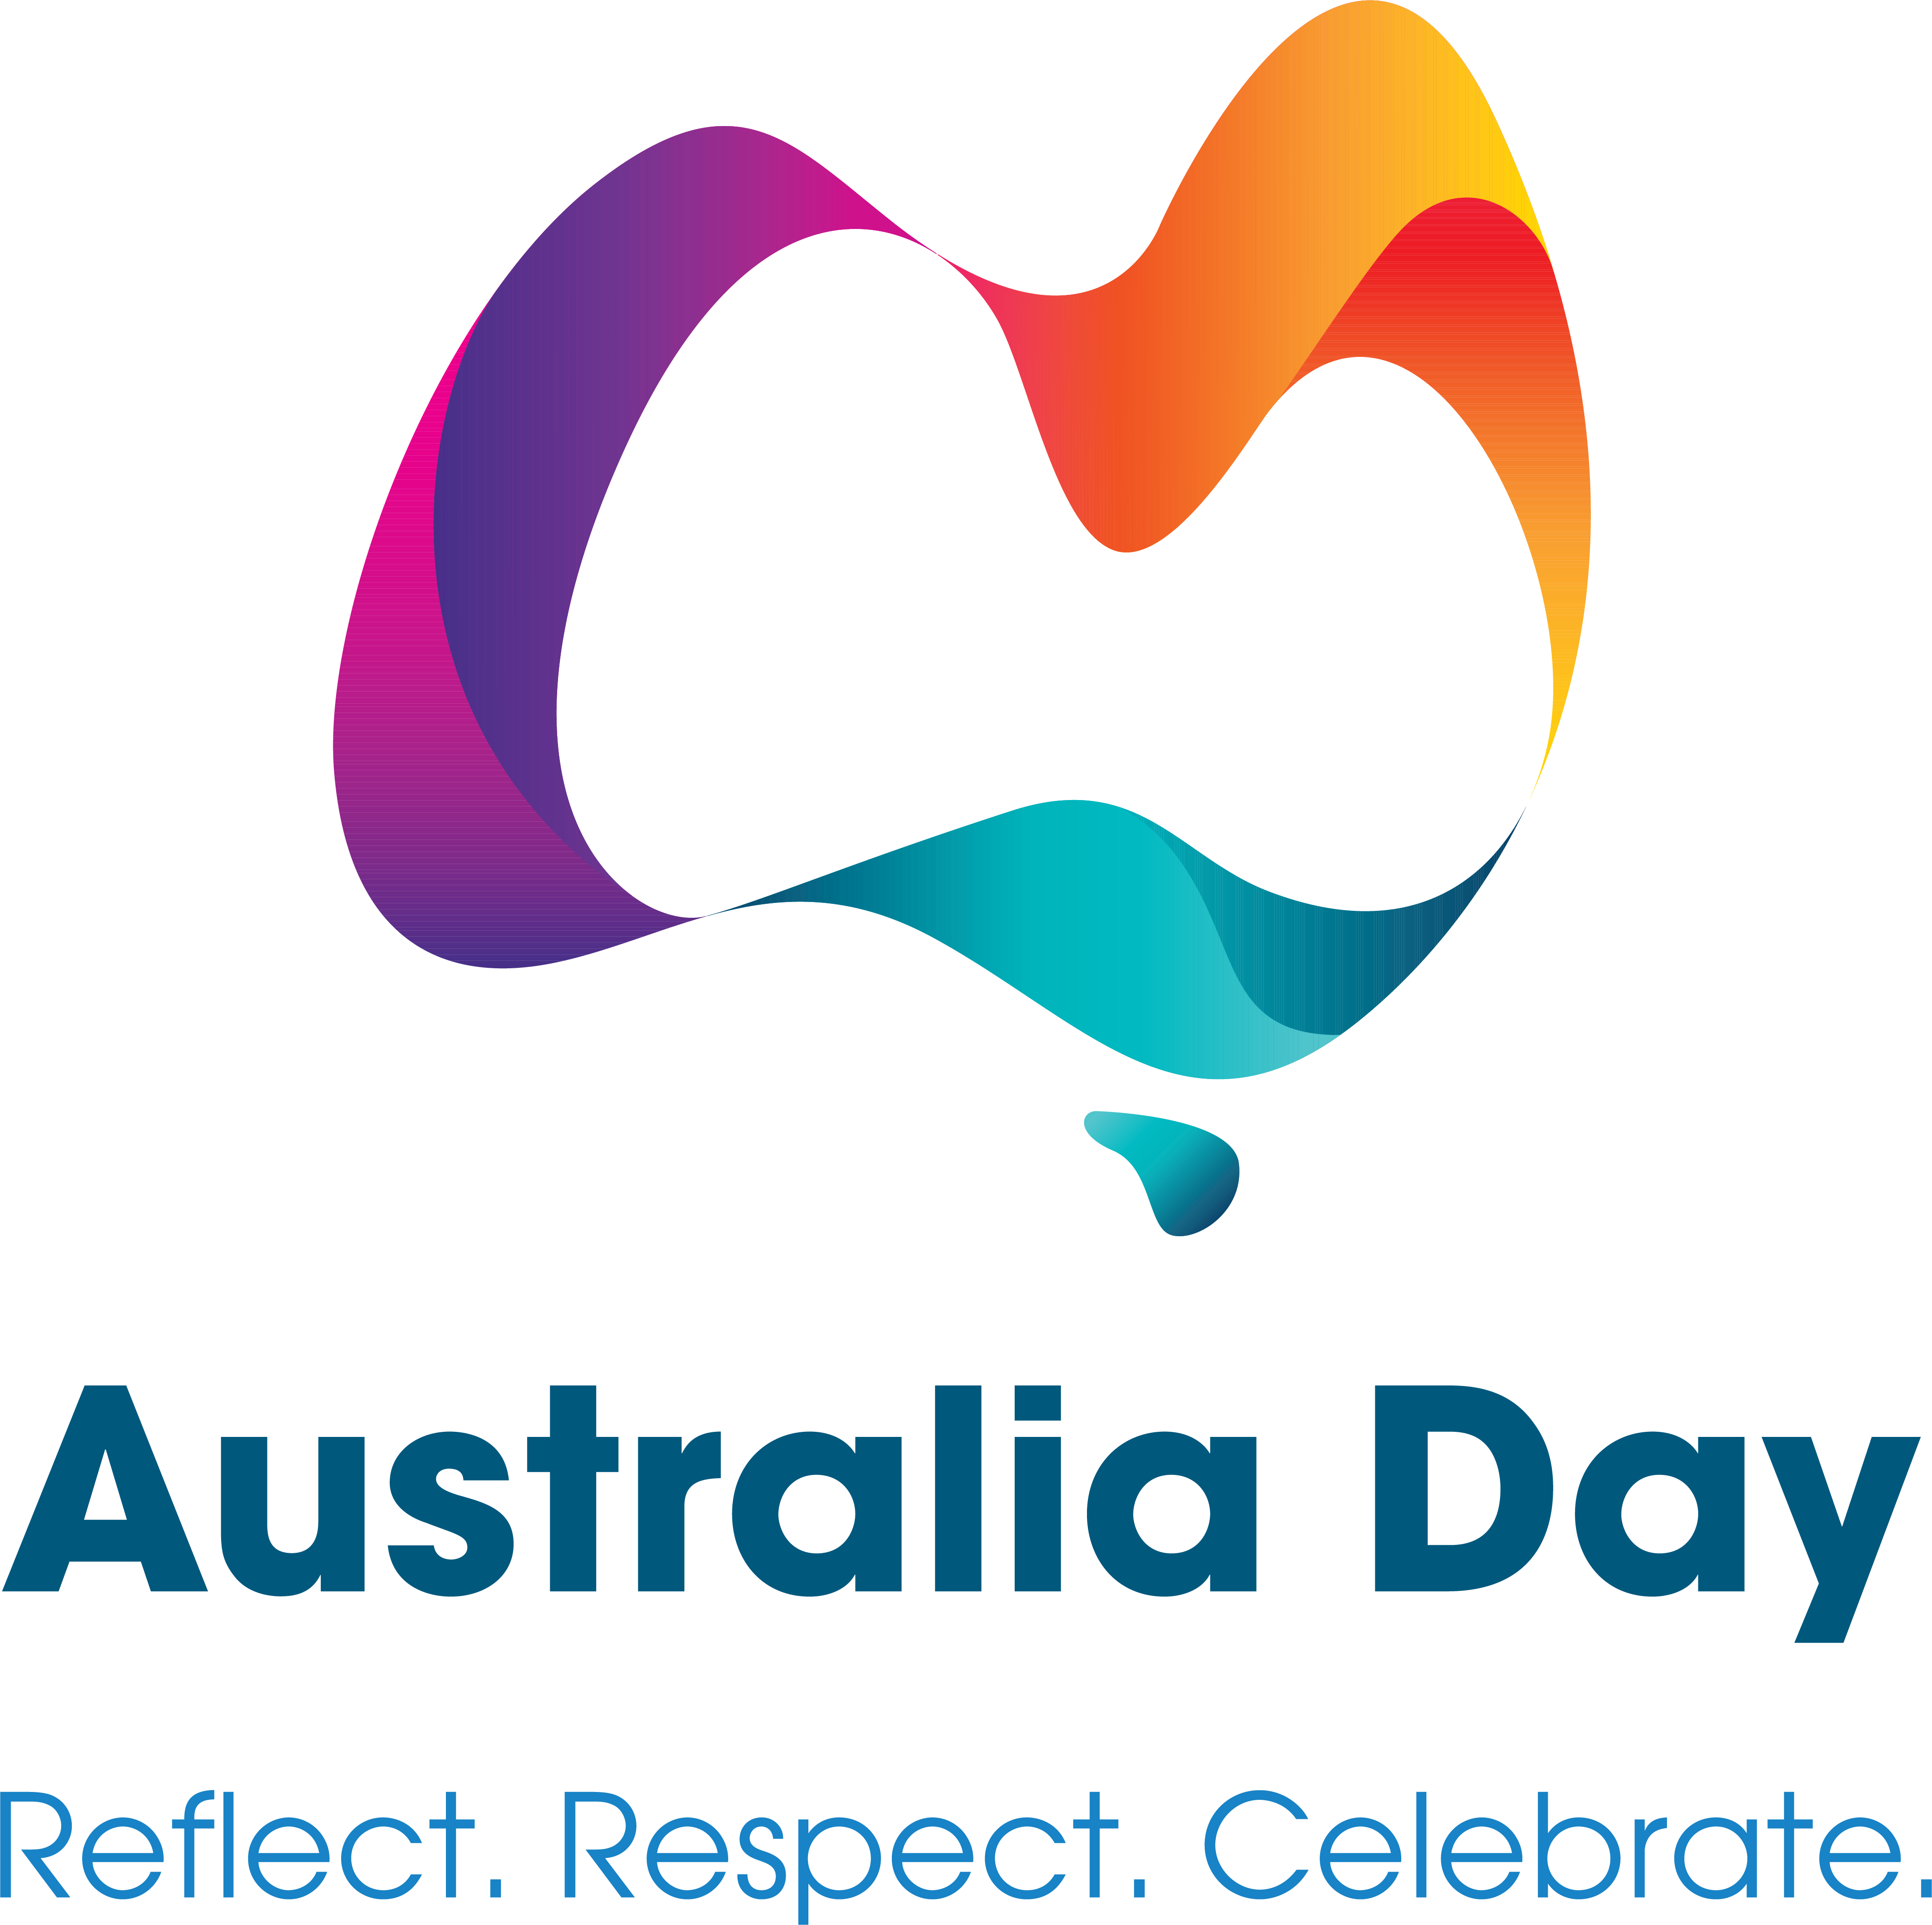 National Australia Day Council